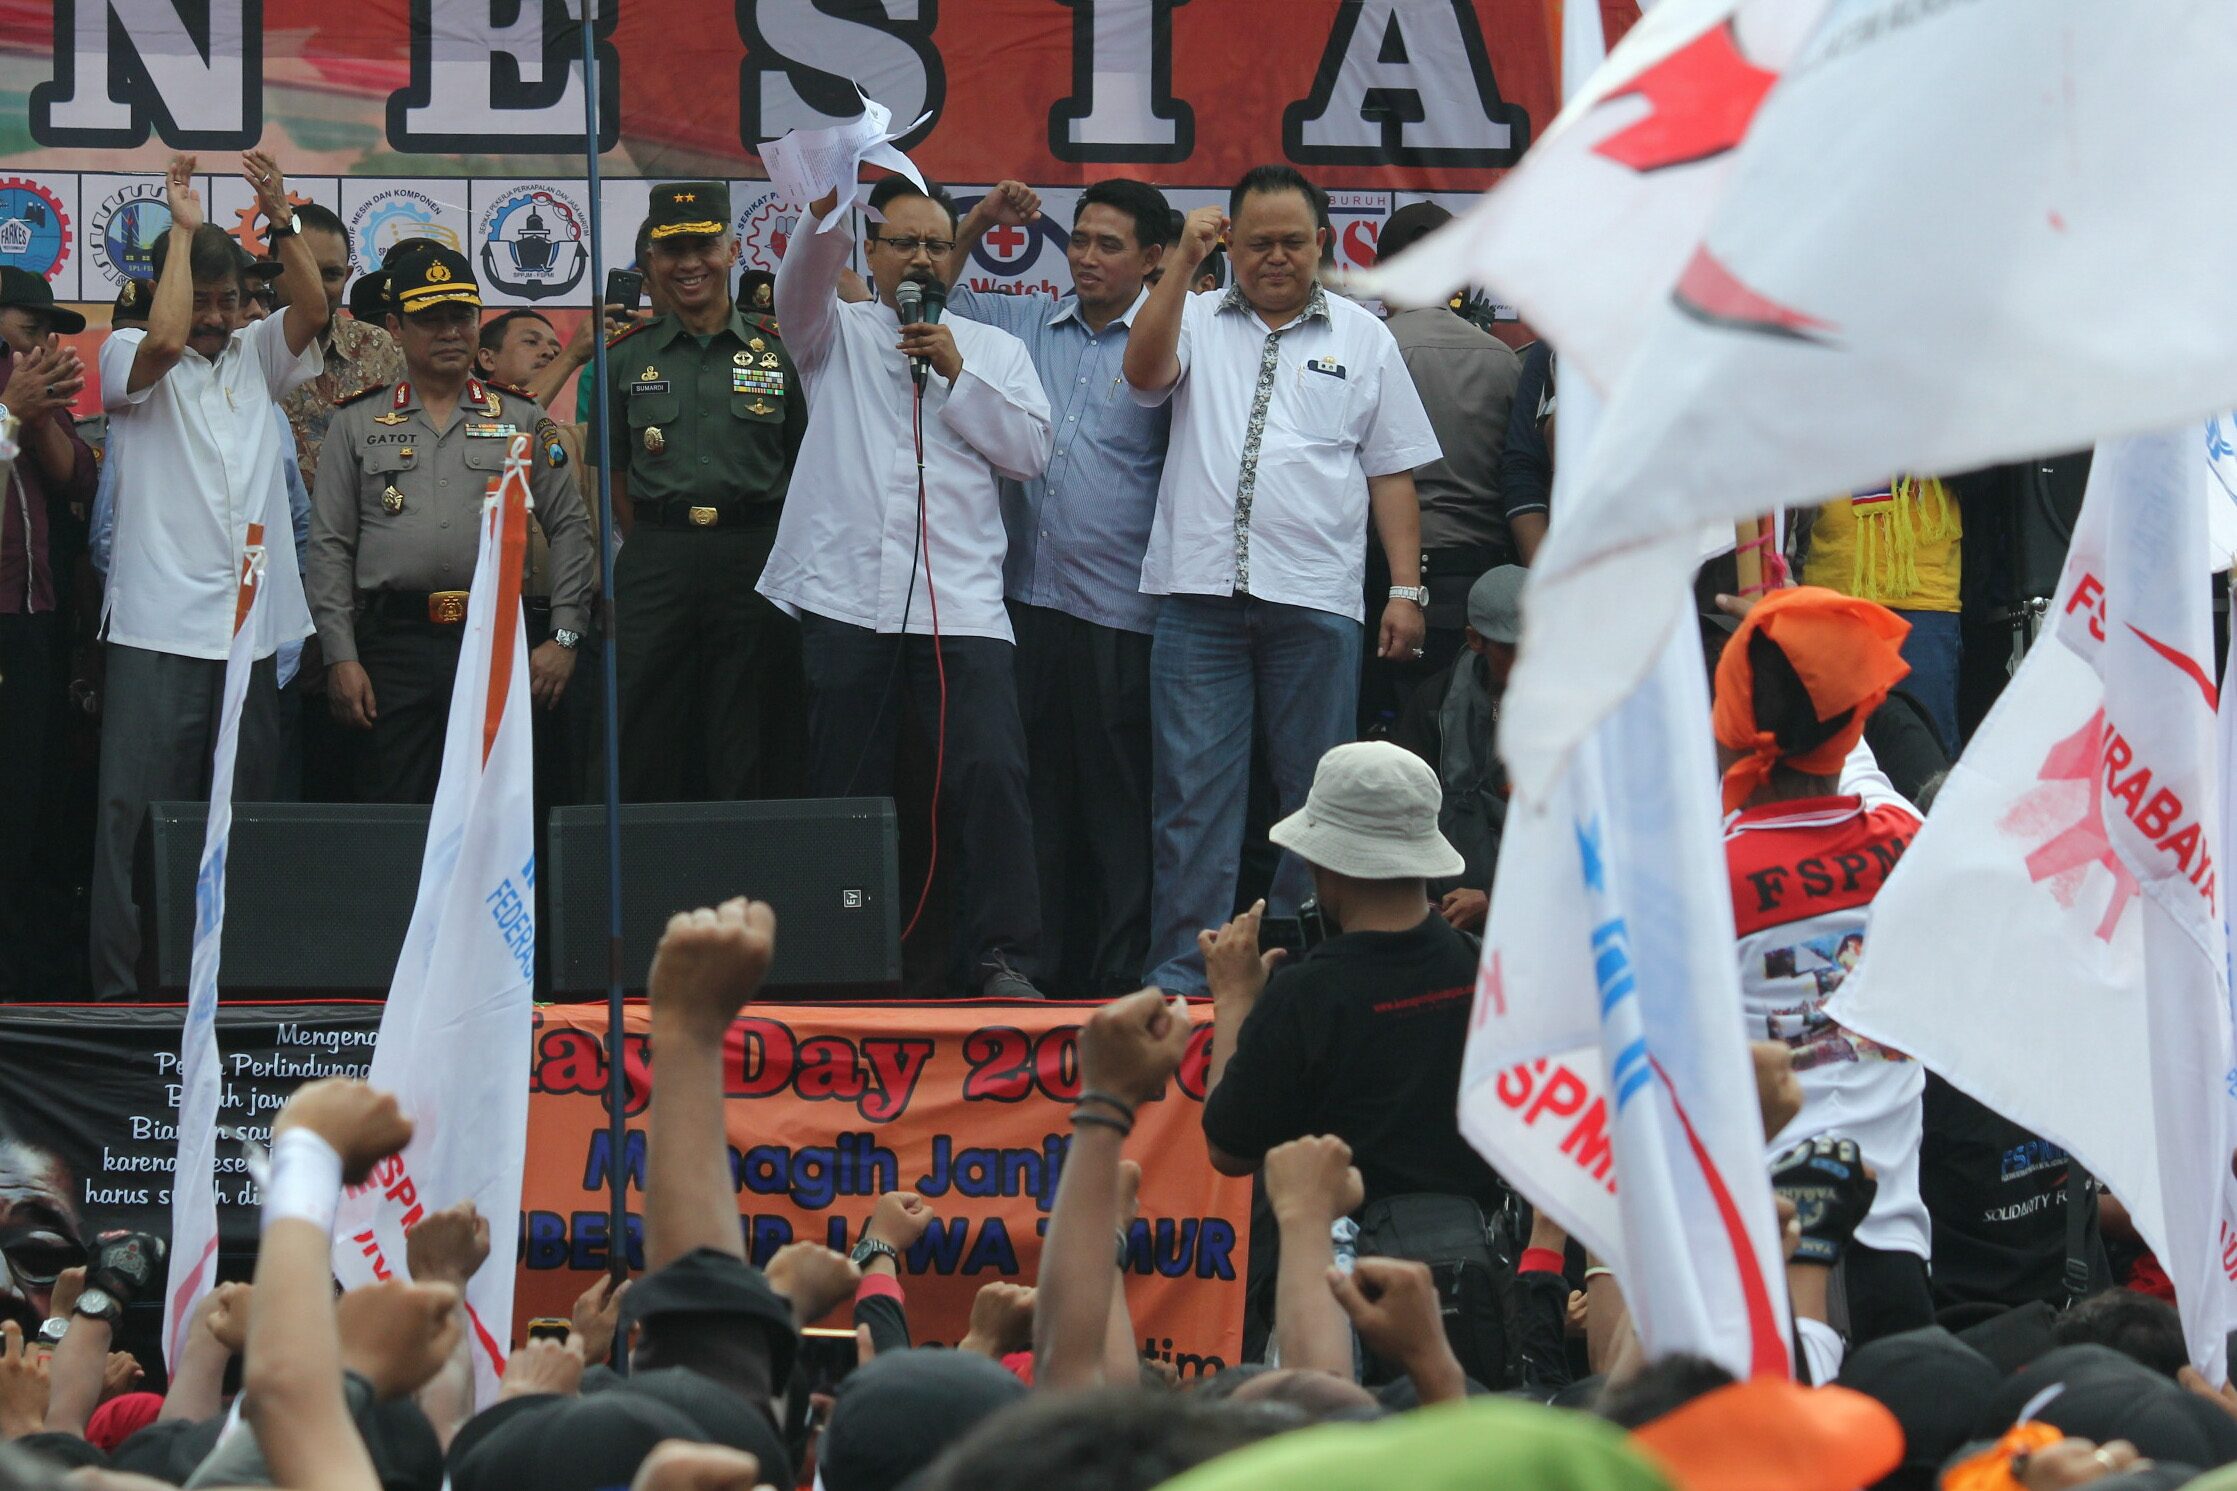 Wakil Gubernur Jawa Timur Saifullah Yusuf (kedua kanan) menemui massa buruh di Gedung DPRD Tk I Jatim, Surabaya, Jawa Timur, Minggu (1/5). Wagub menampung aspirasi yang disampaikan massa buruh saat berunjuk rasa memperingati Hari Buruh Internasional. ANTARA FOTO/Didik Suhartono/ama/16 